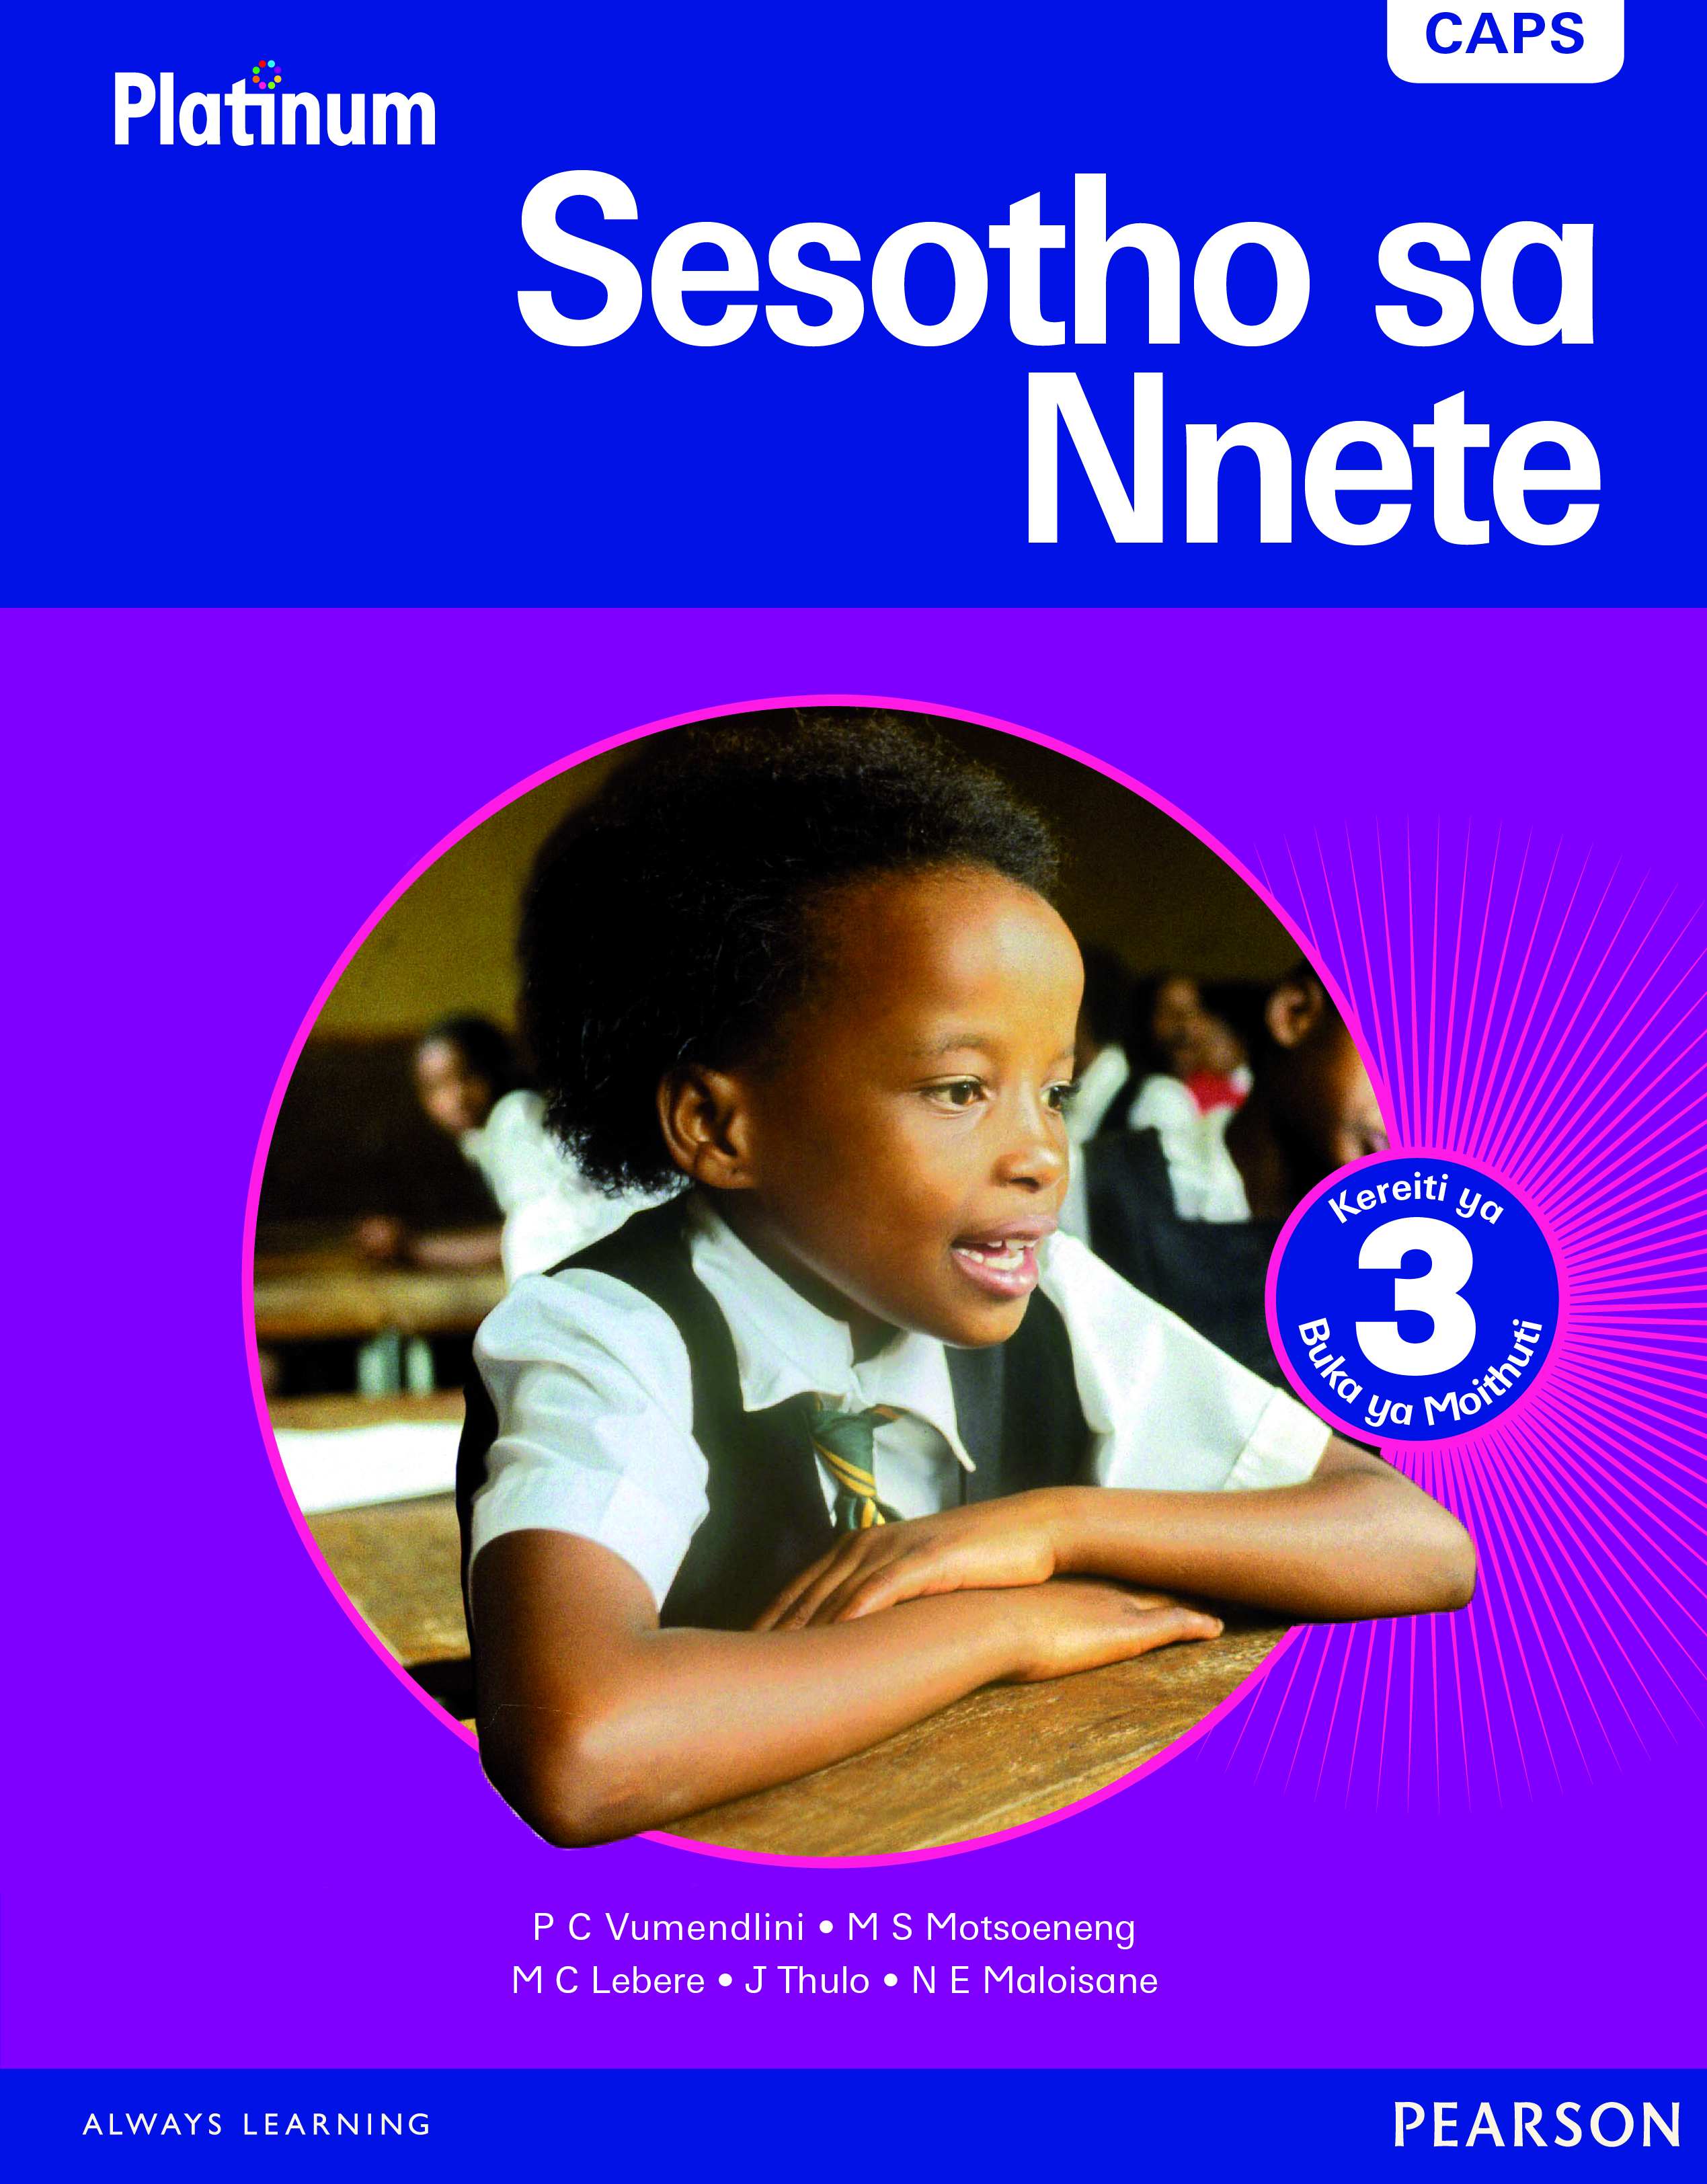 Picture of Platinum Sesotho Sa Nnete: Platinum sesotho sa nnete: Gr 3: Learner's book Gr 3: Learner's Book